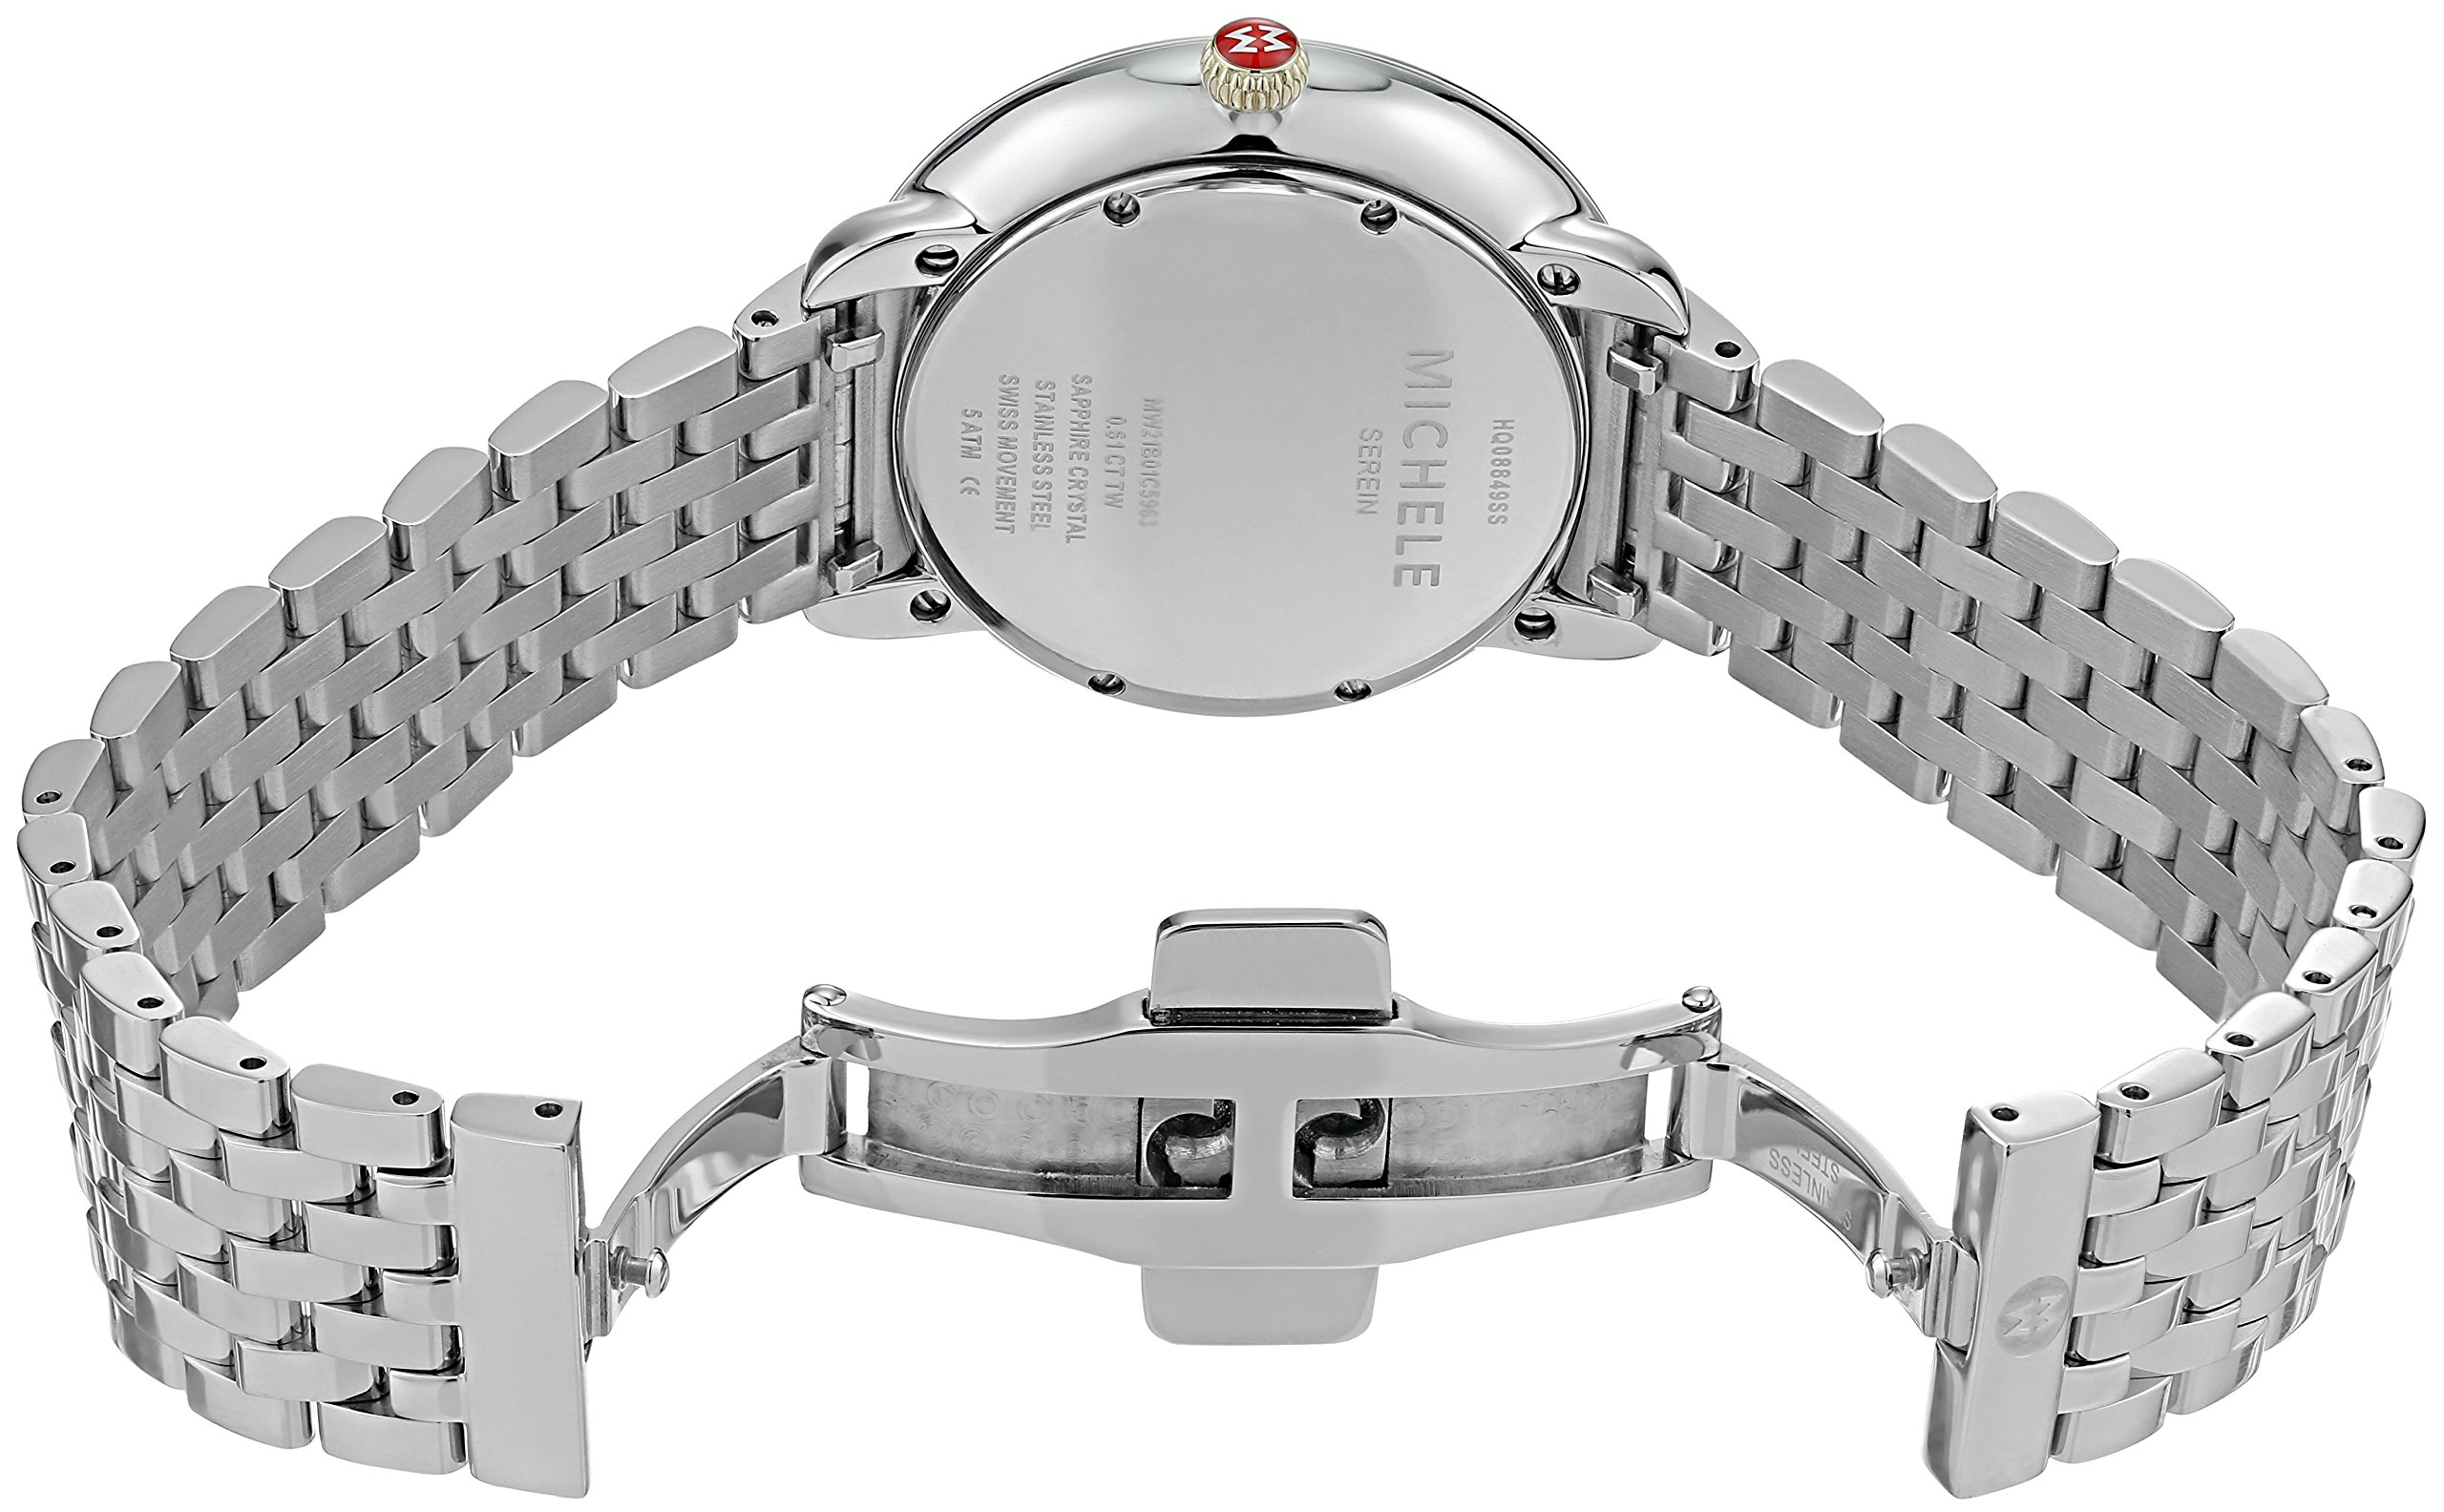 MICHELE Women's MWW21B000030 Serein Analog Display Swiss Quartz Silver Watch